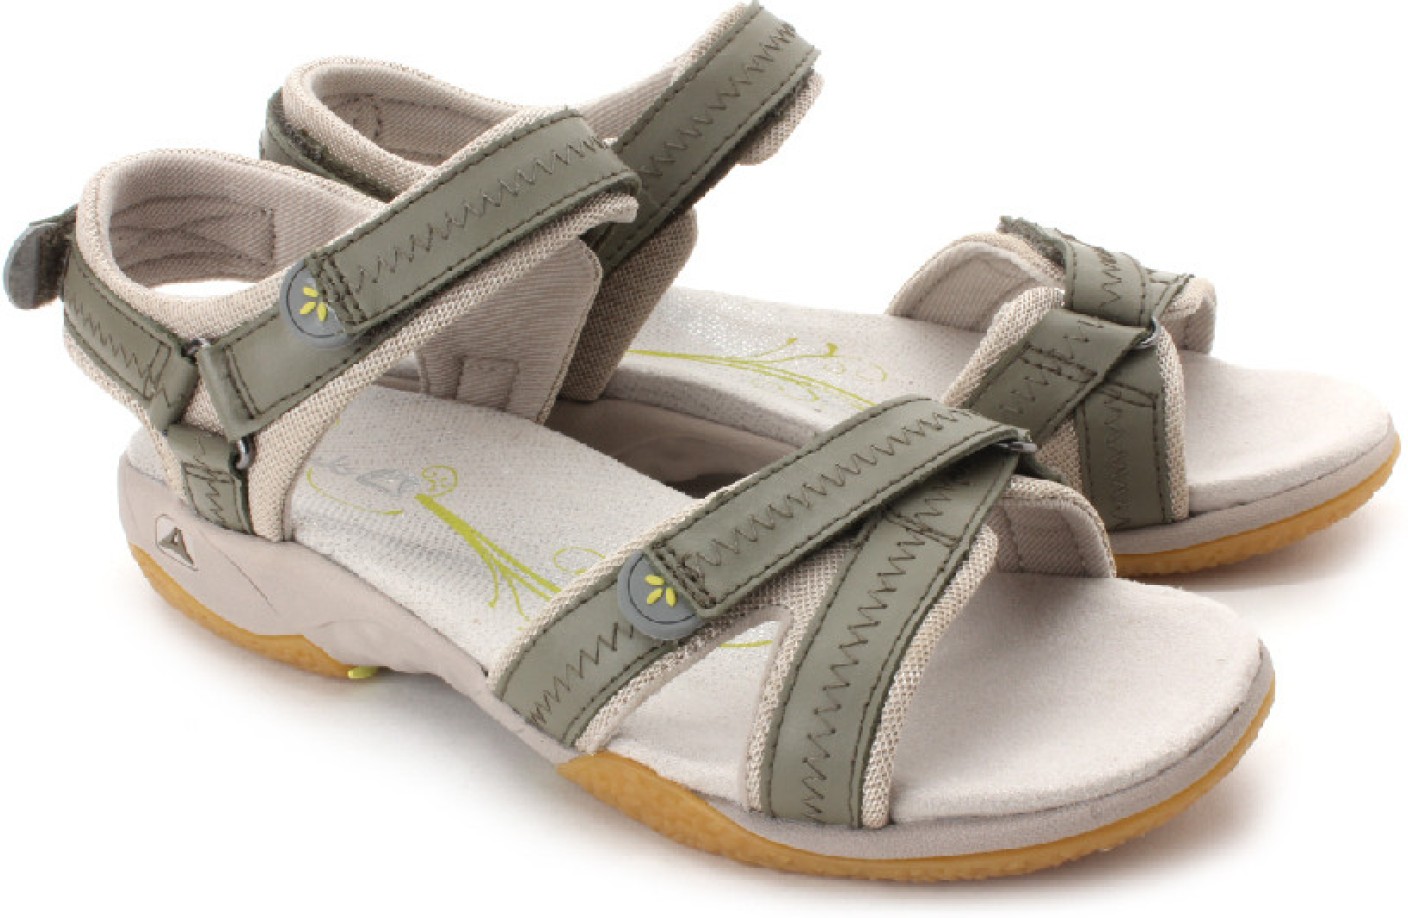 Clarks Women Khaki Leather Sports Sandals - Buy Khaki ...